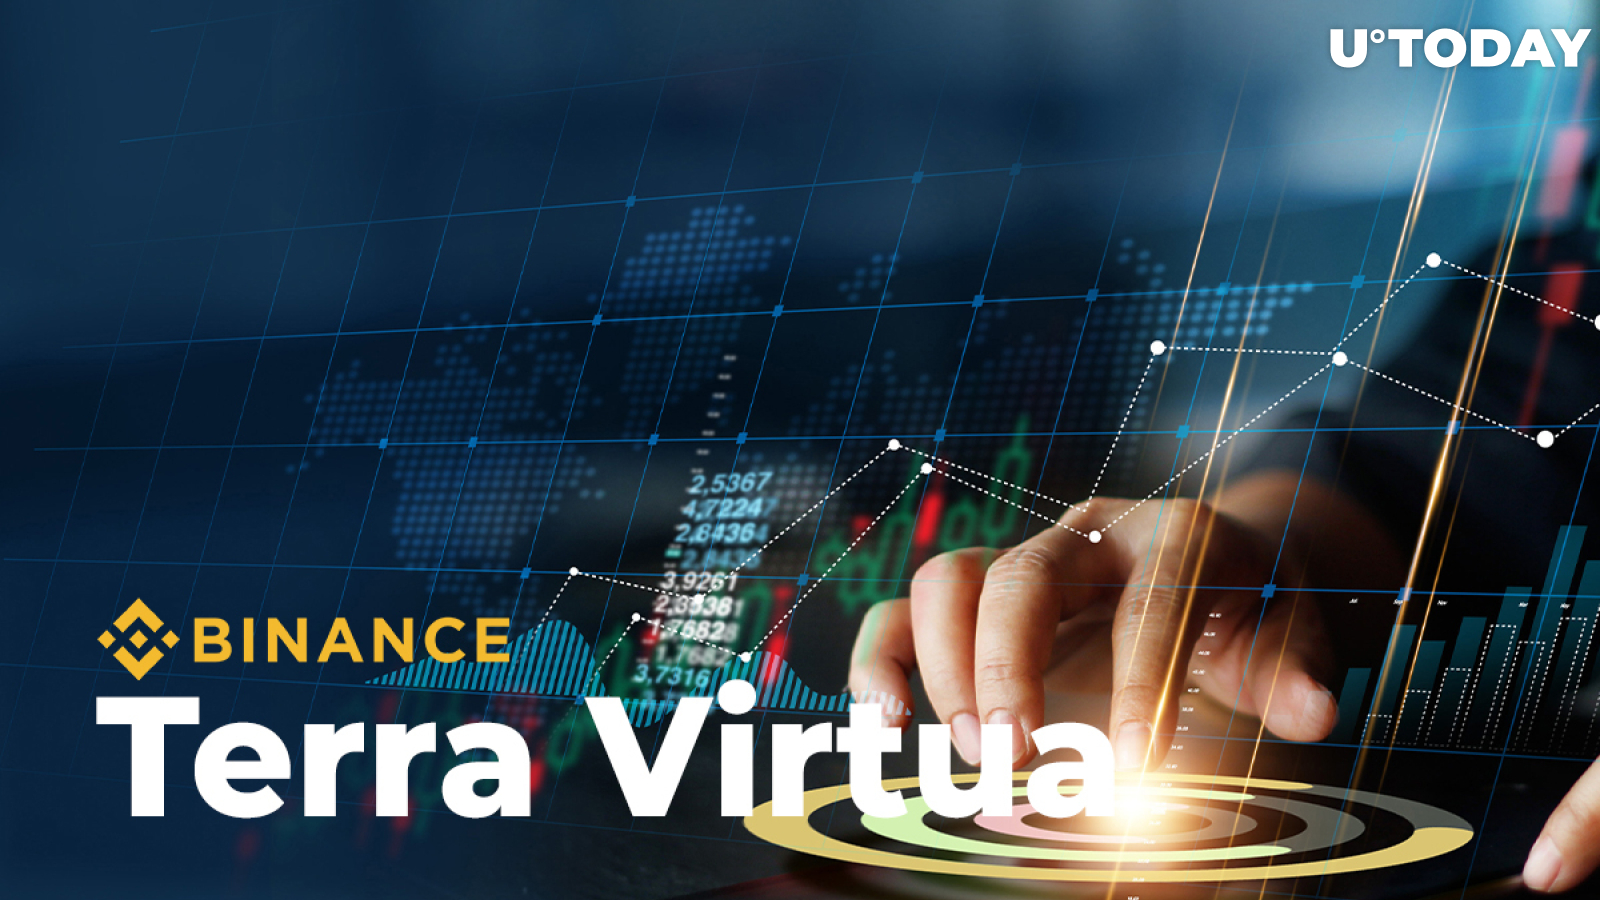 Binance (BNB) Launches Terra Virtua (TVK) Staking Program with Ultra-High APY